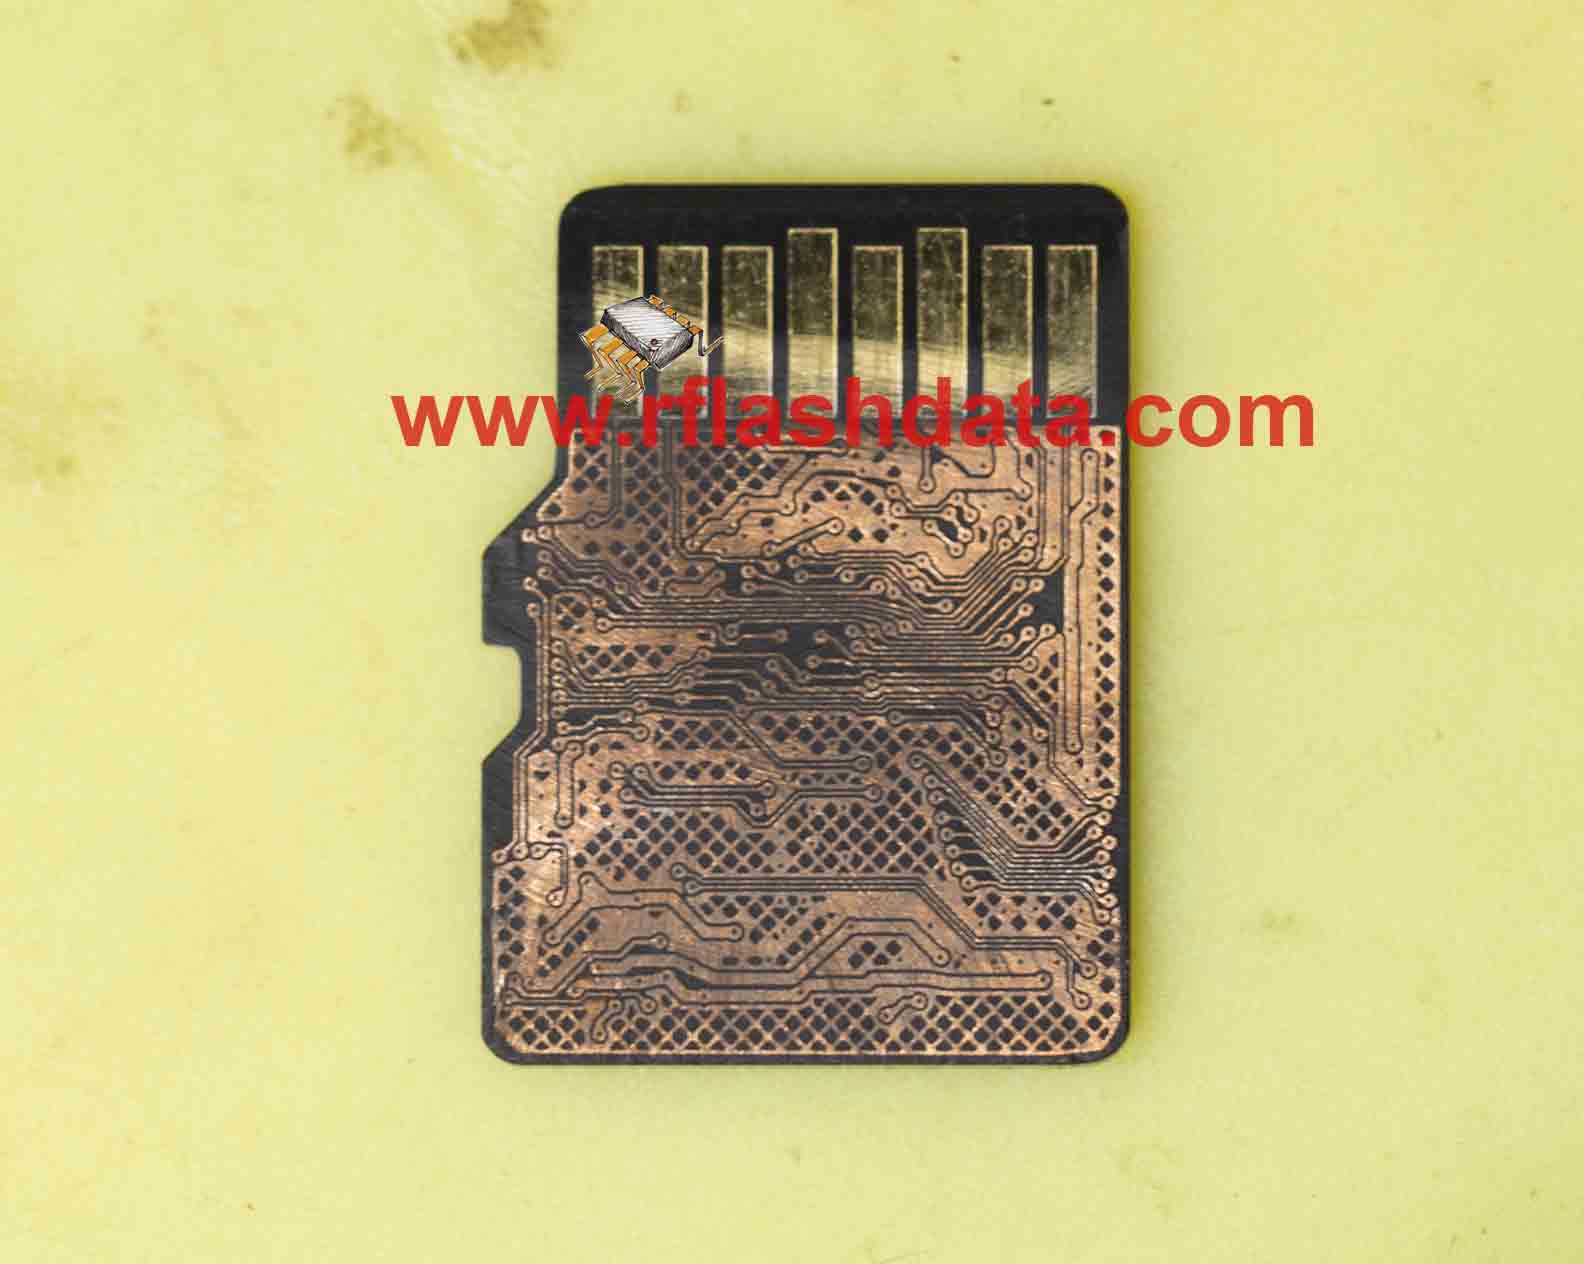 microSD card pinout data recovery